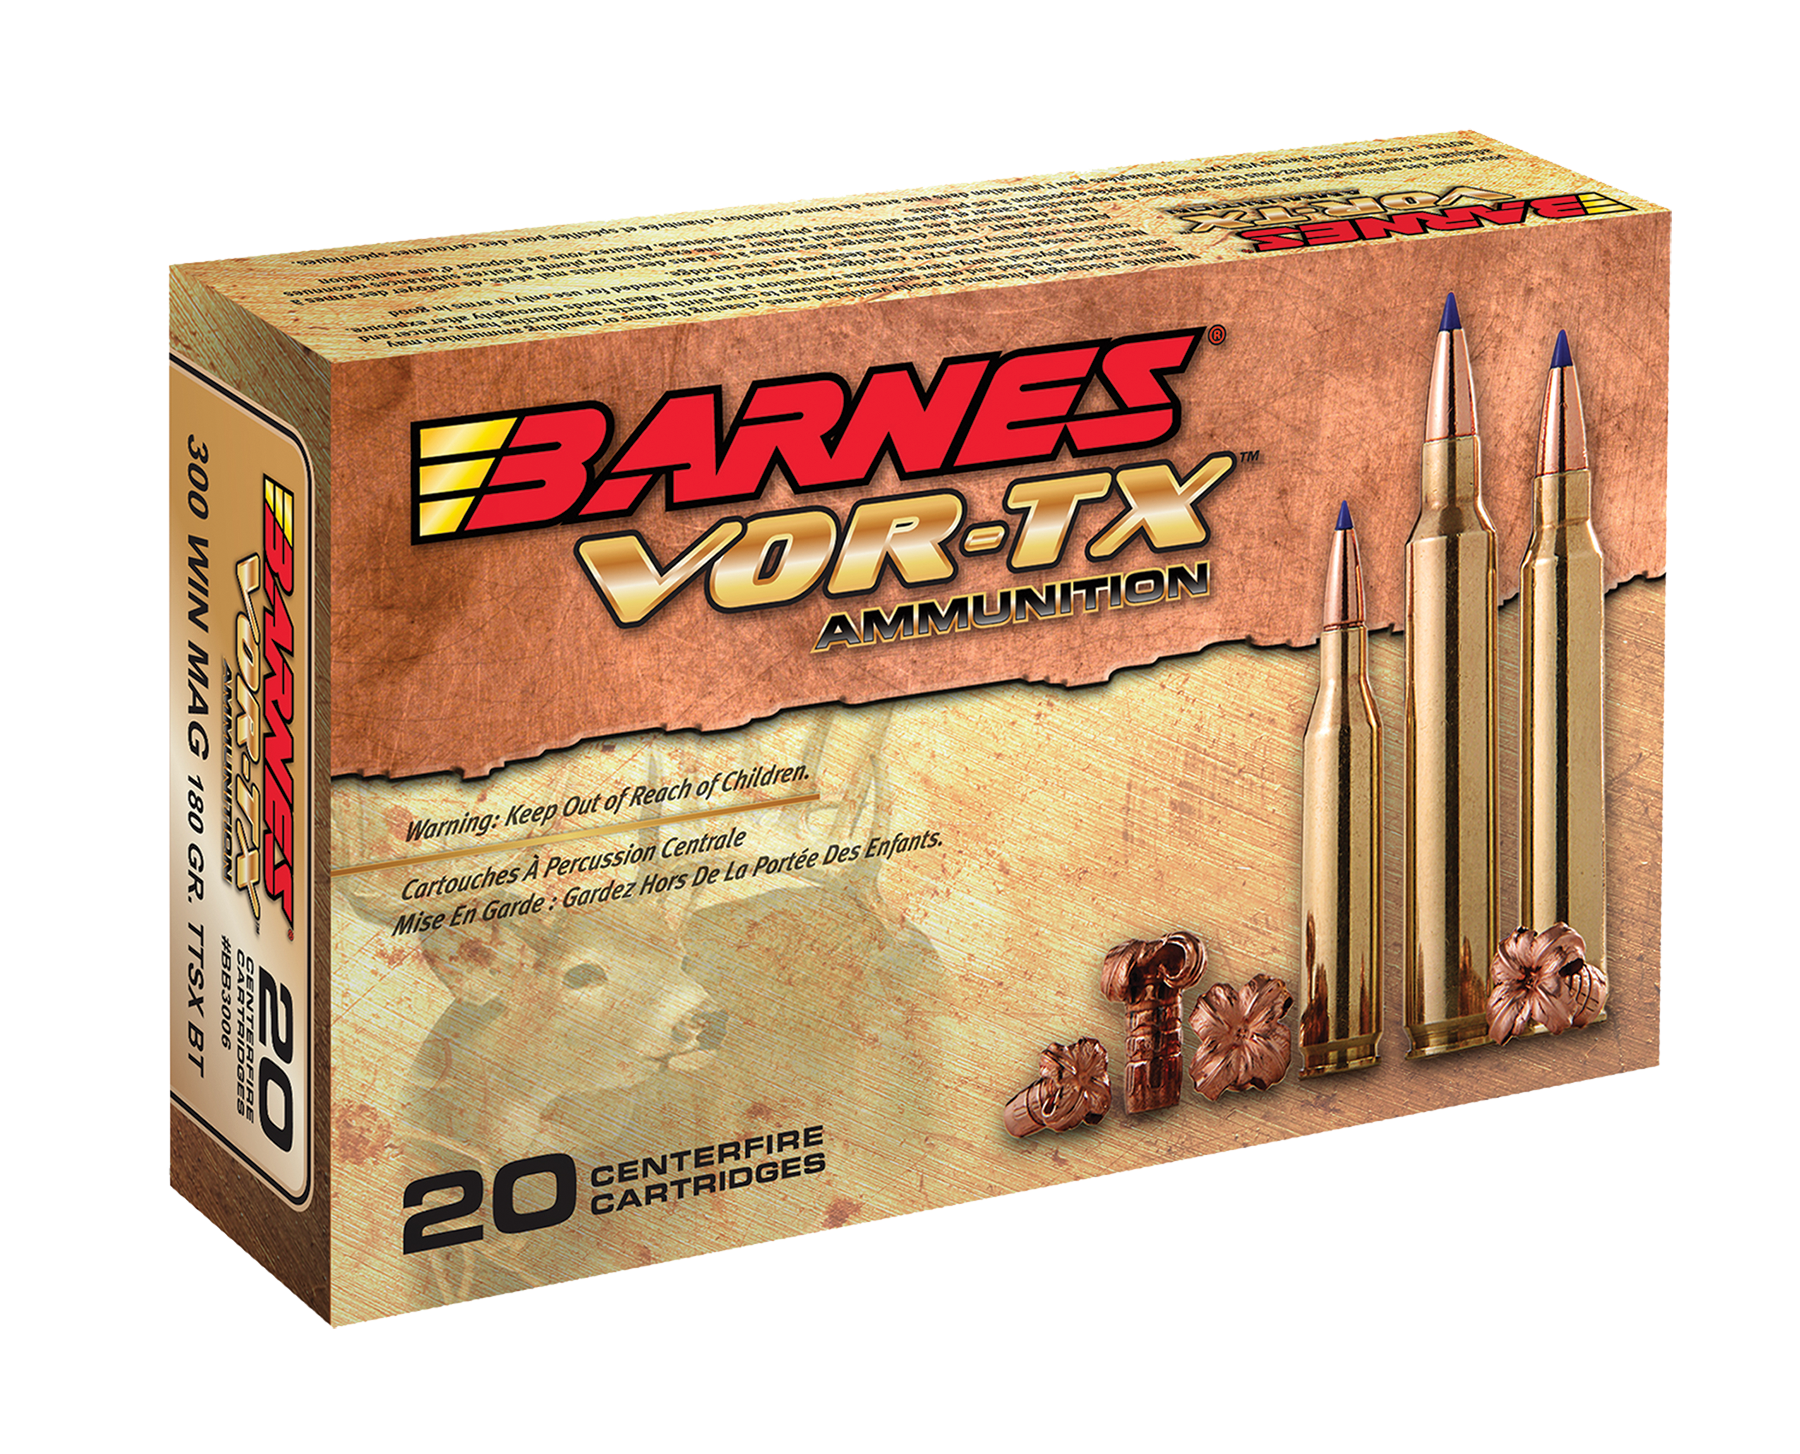 Barnes VOR-TX Weatherby TTSX Boat Tail Ammo